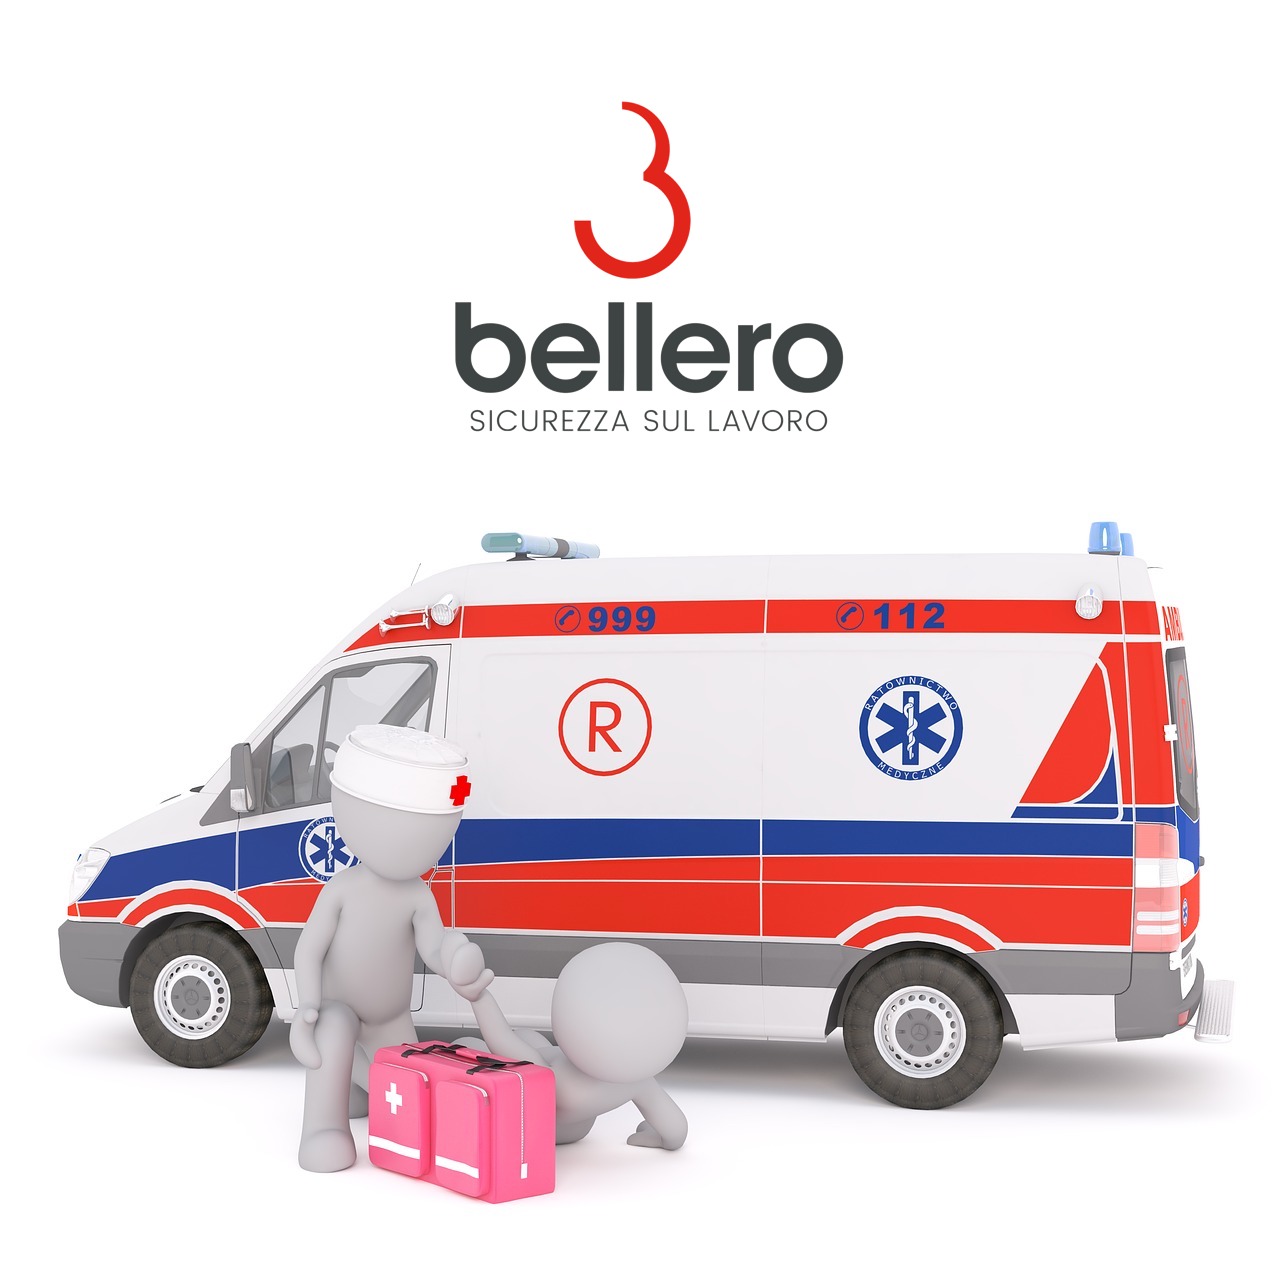 blog-ambulance-1874765-1280